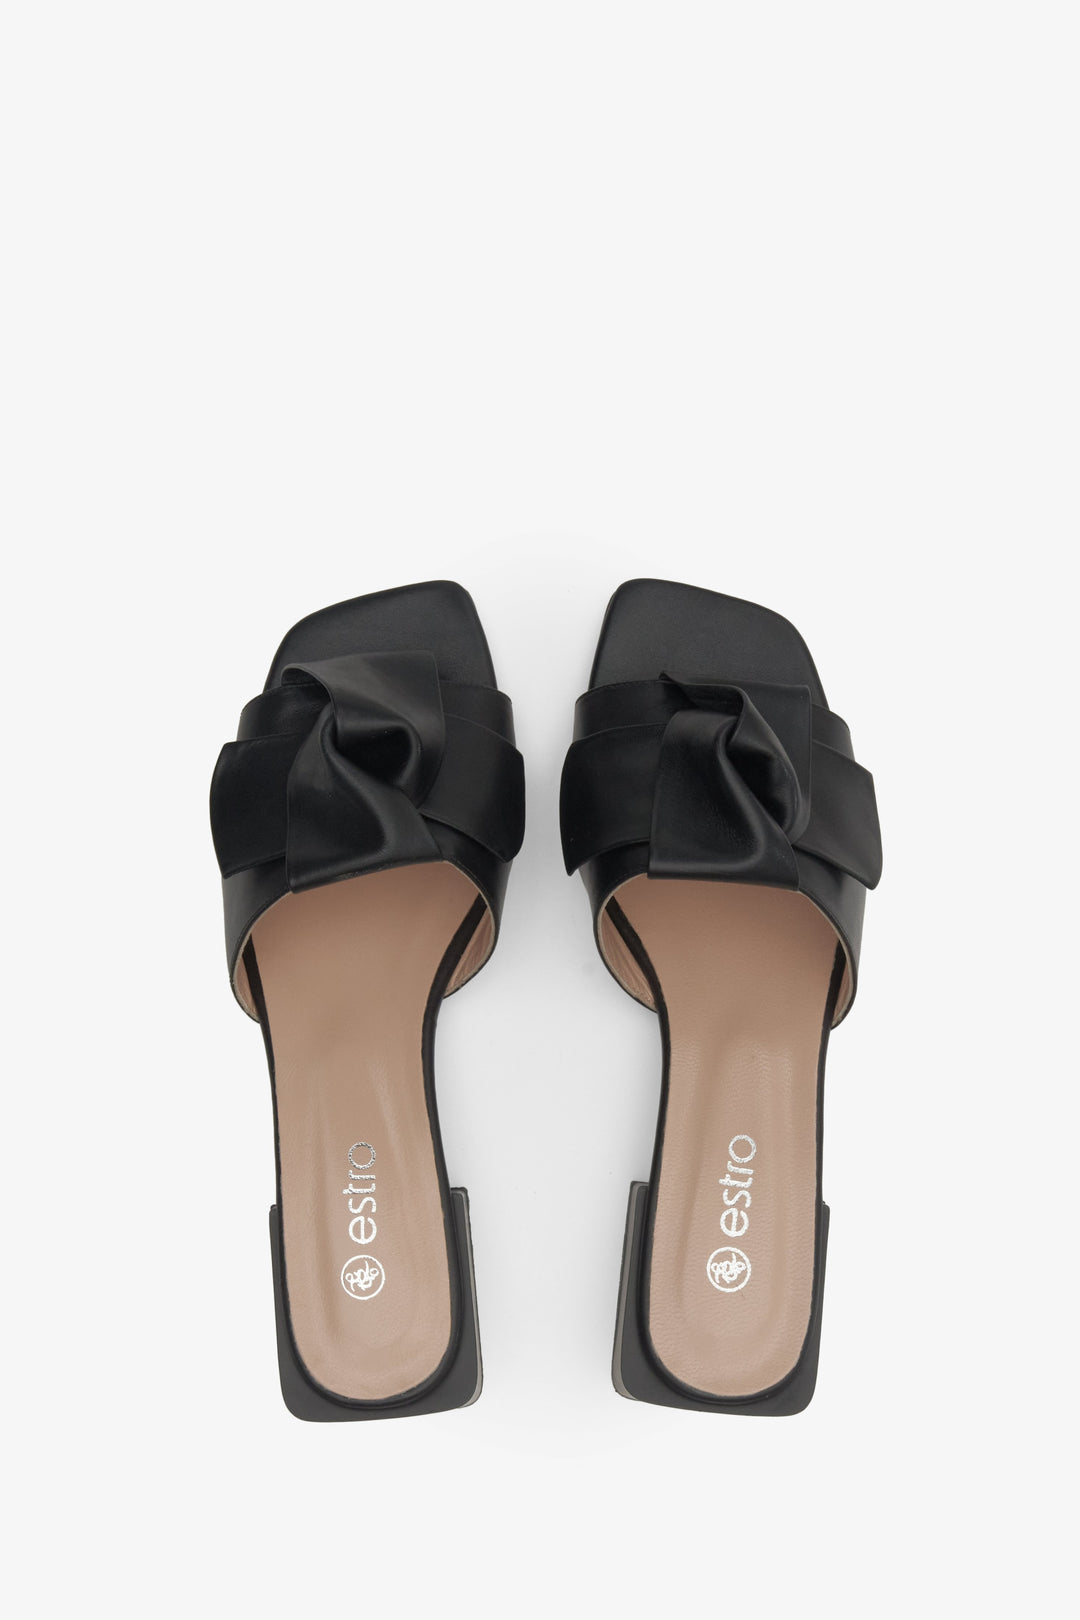 Women's low-heeled black mules by Estro - top view presentation of footwear.